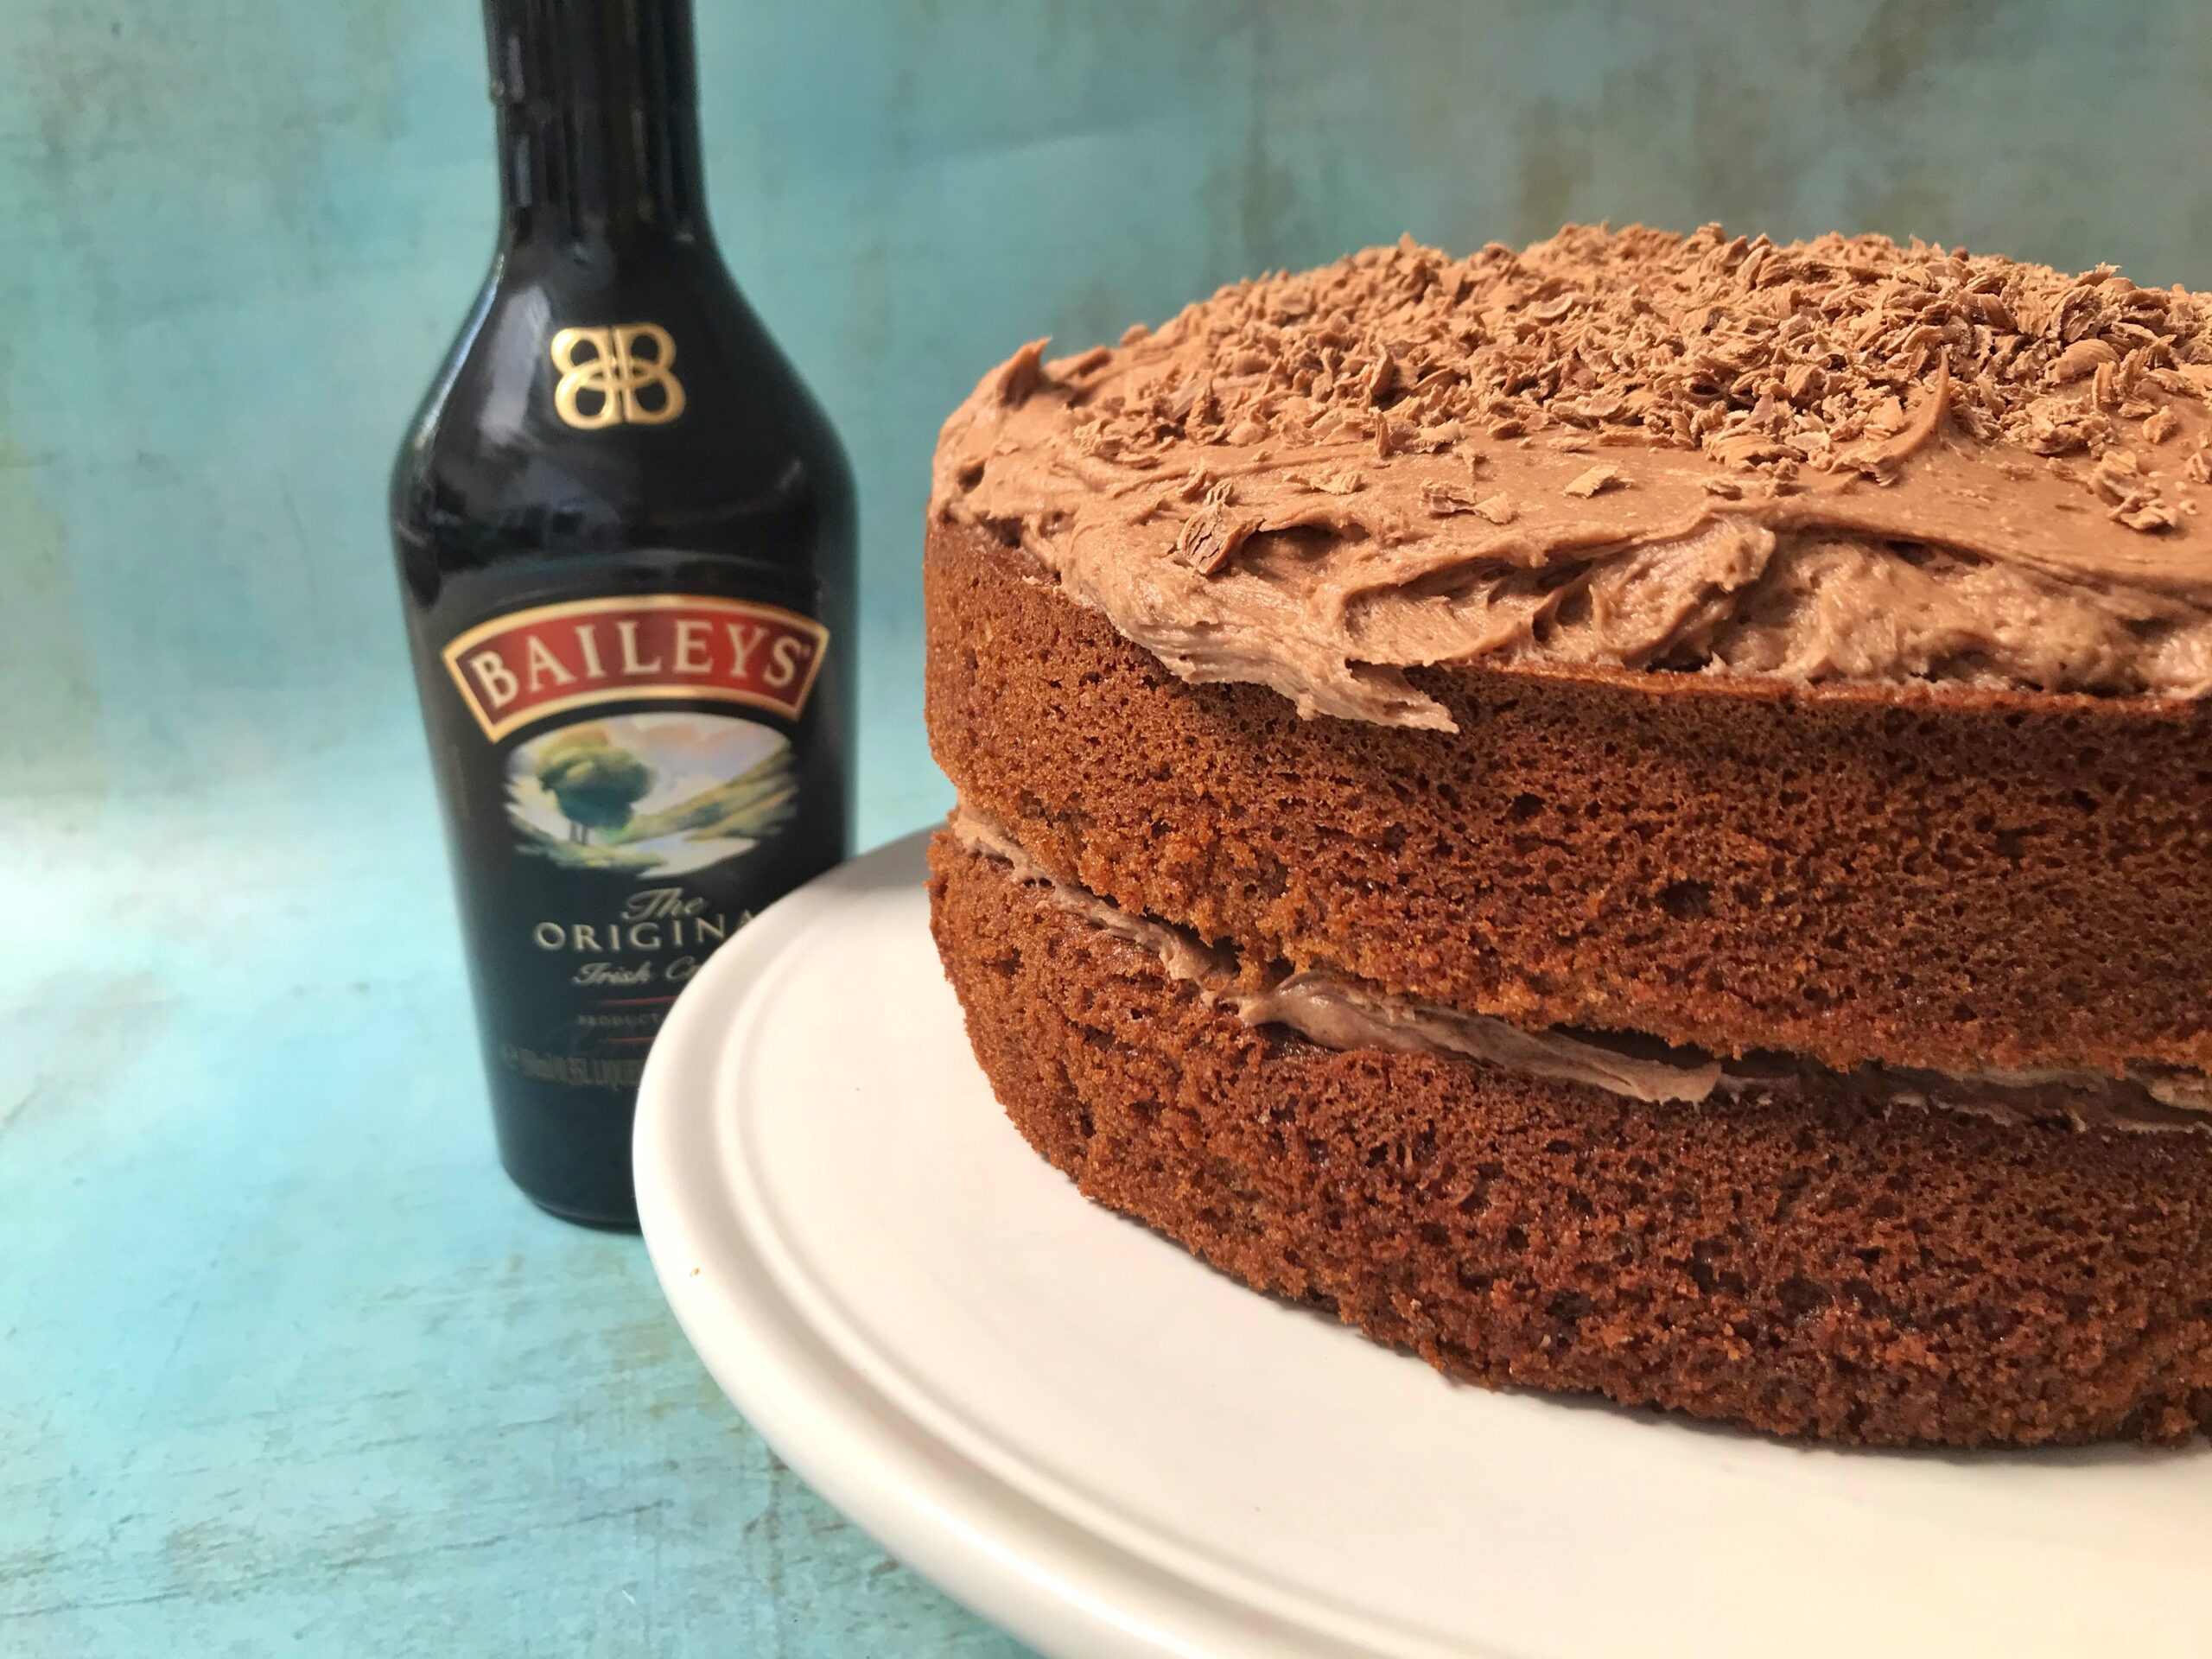 Thermomix Chocolate Mud Cake Recipe with Baileys - ThermoFun